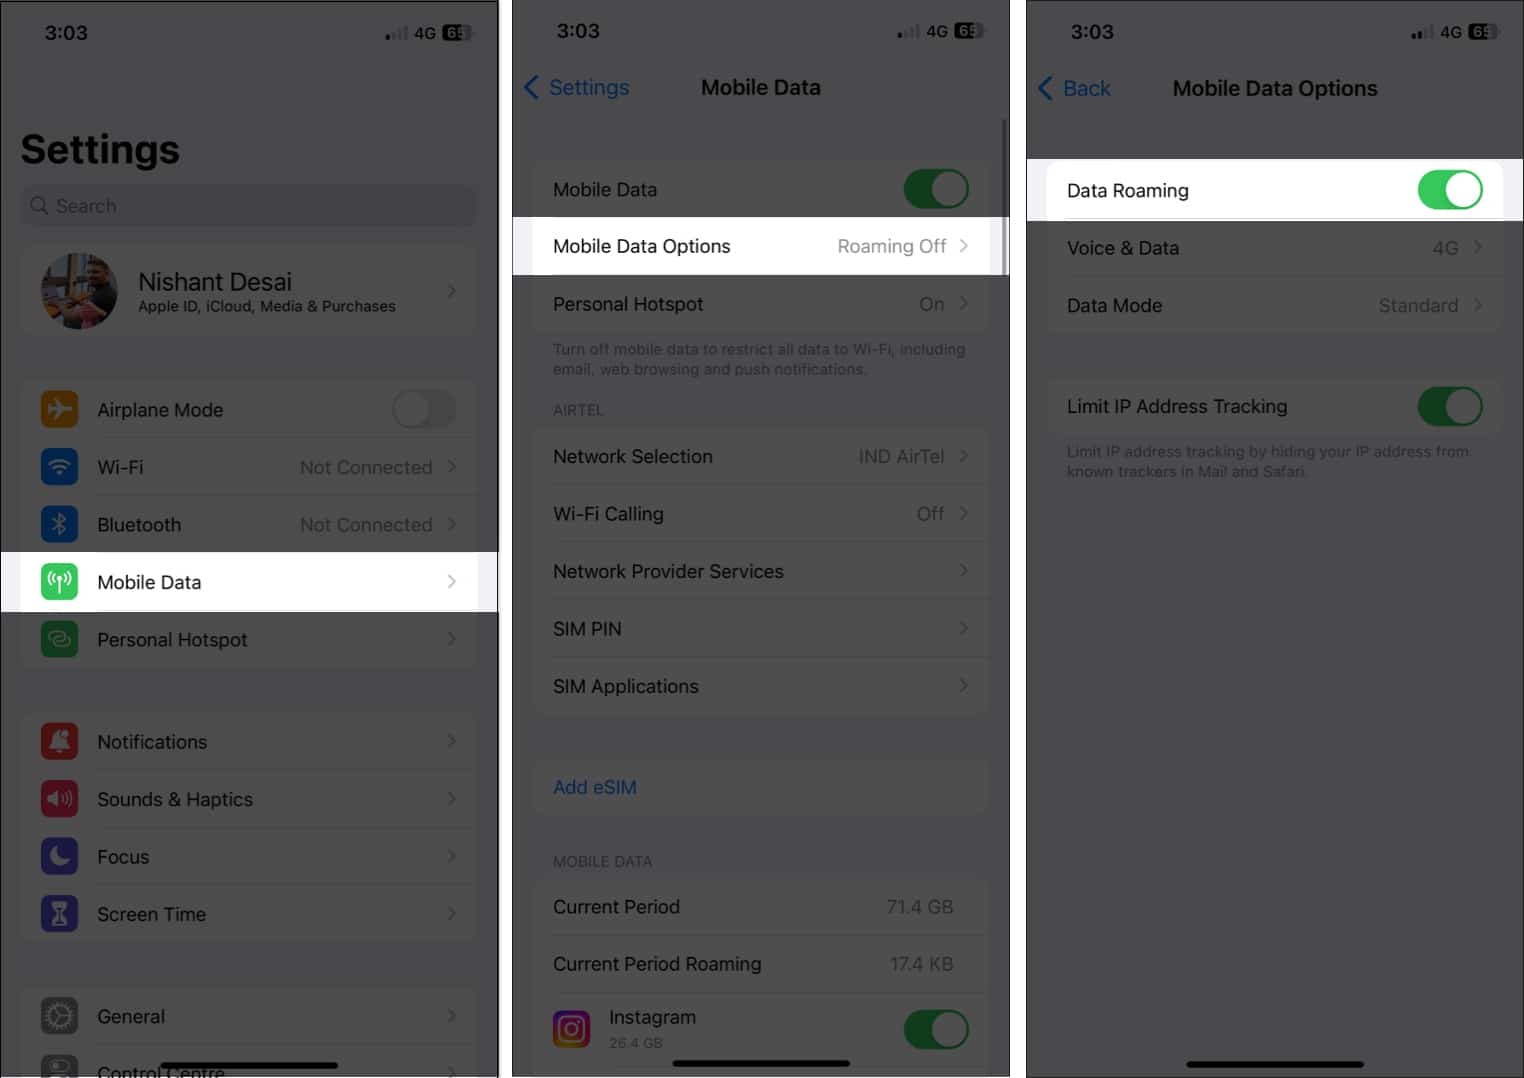 Access mobile data, mobile data option, toggle on data roaming in settings app